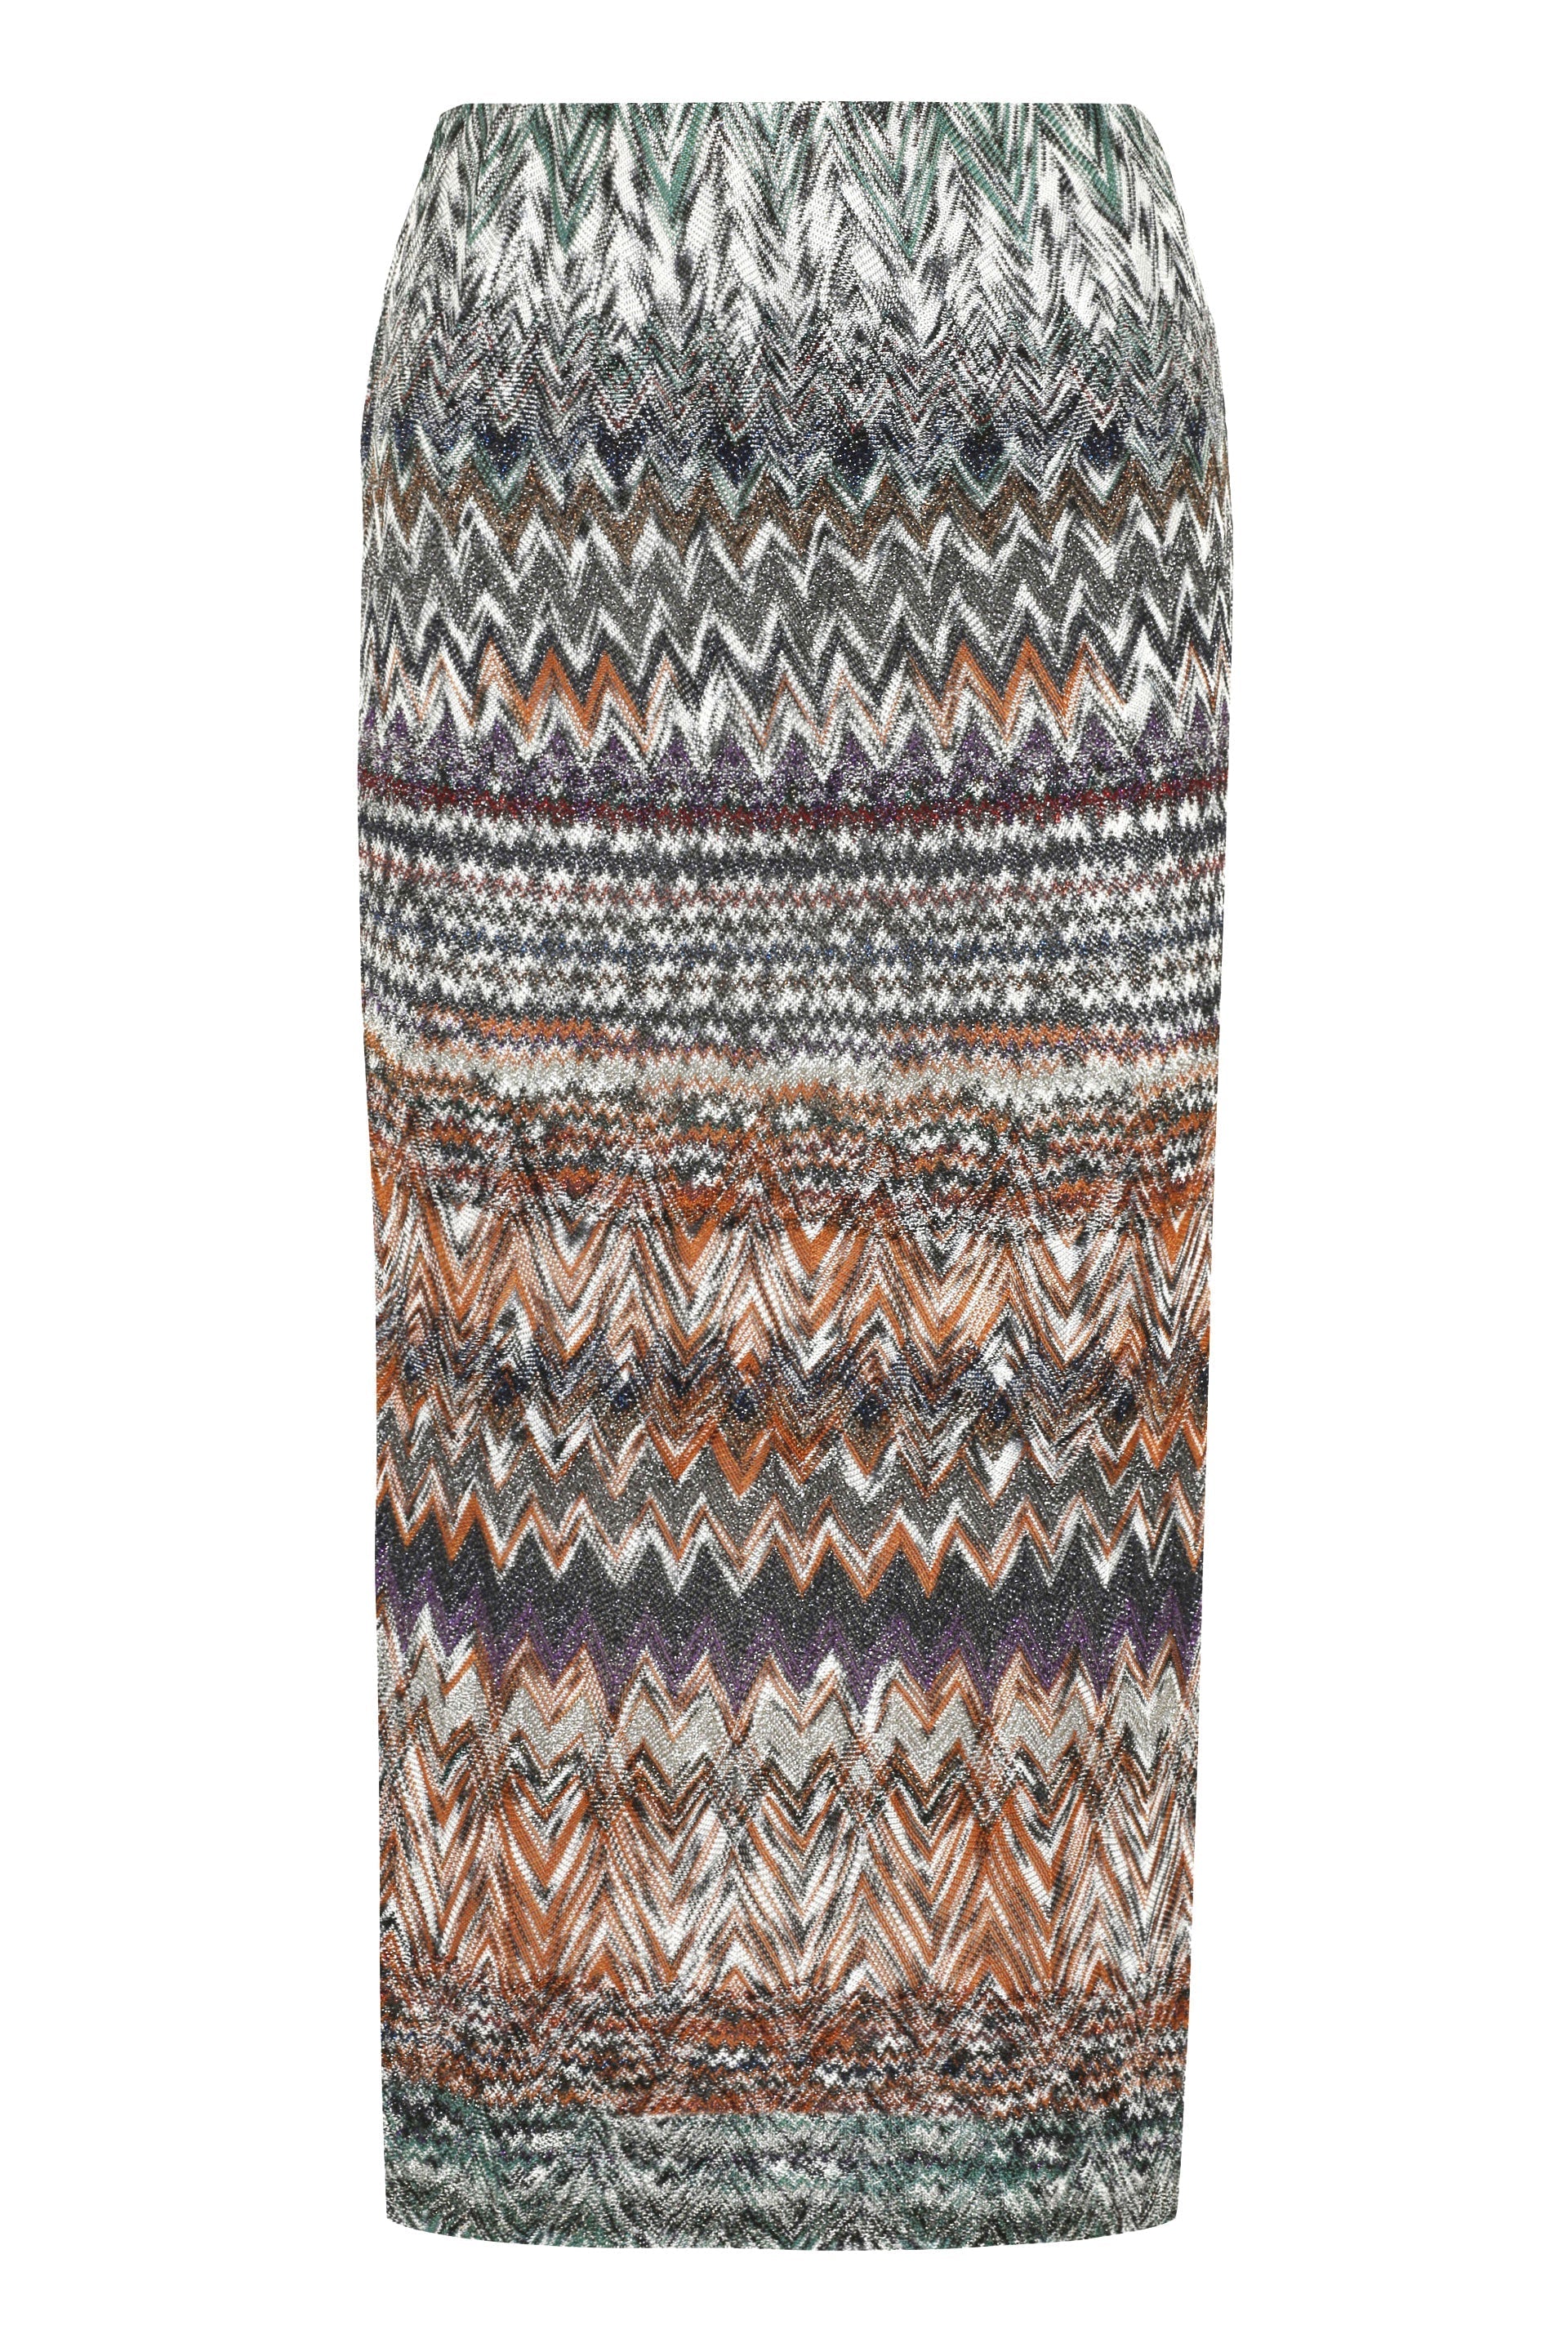 Chevron motif knitted skirt-Missoni-OUTLET-SALE-ARCHIVIST